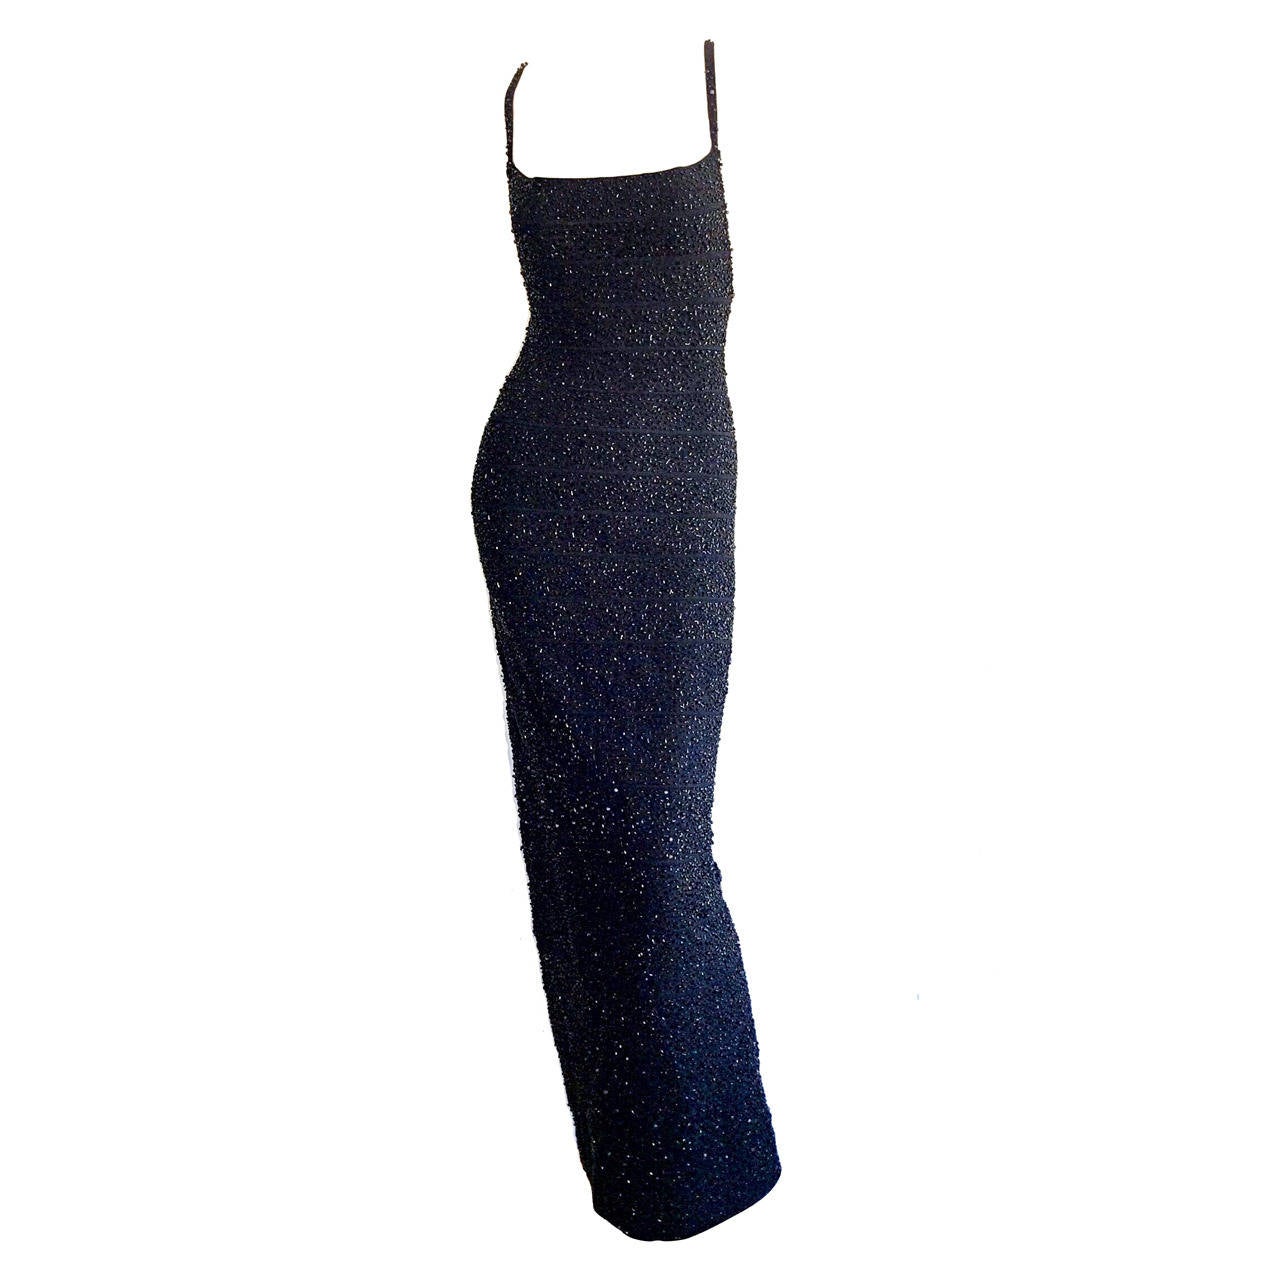 Surreal 1990s Vintage Herve Leger Couture Runway Sample Beaded Bandage Dress